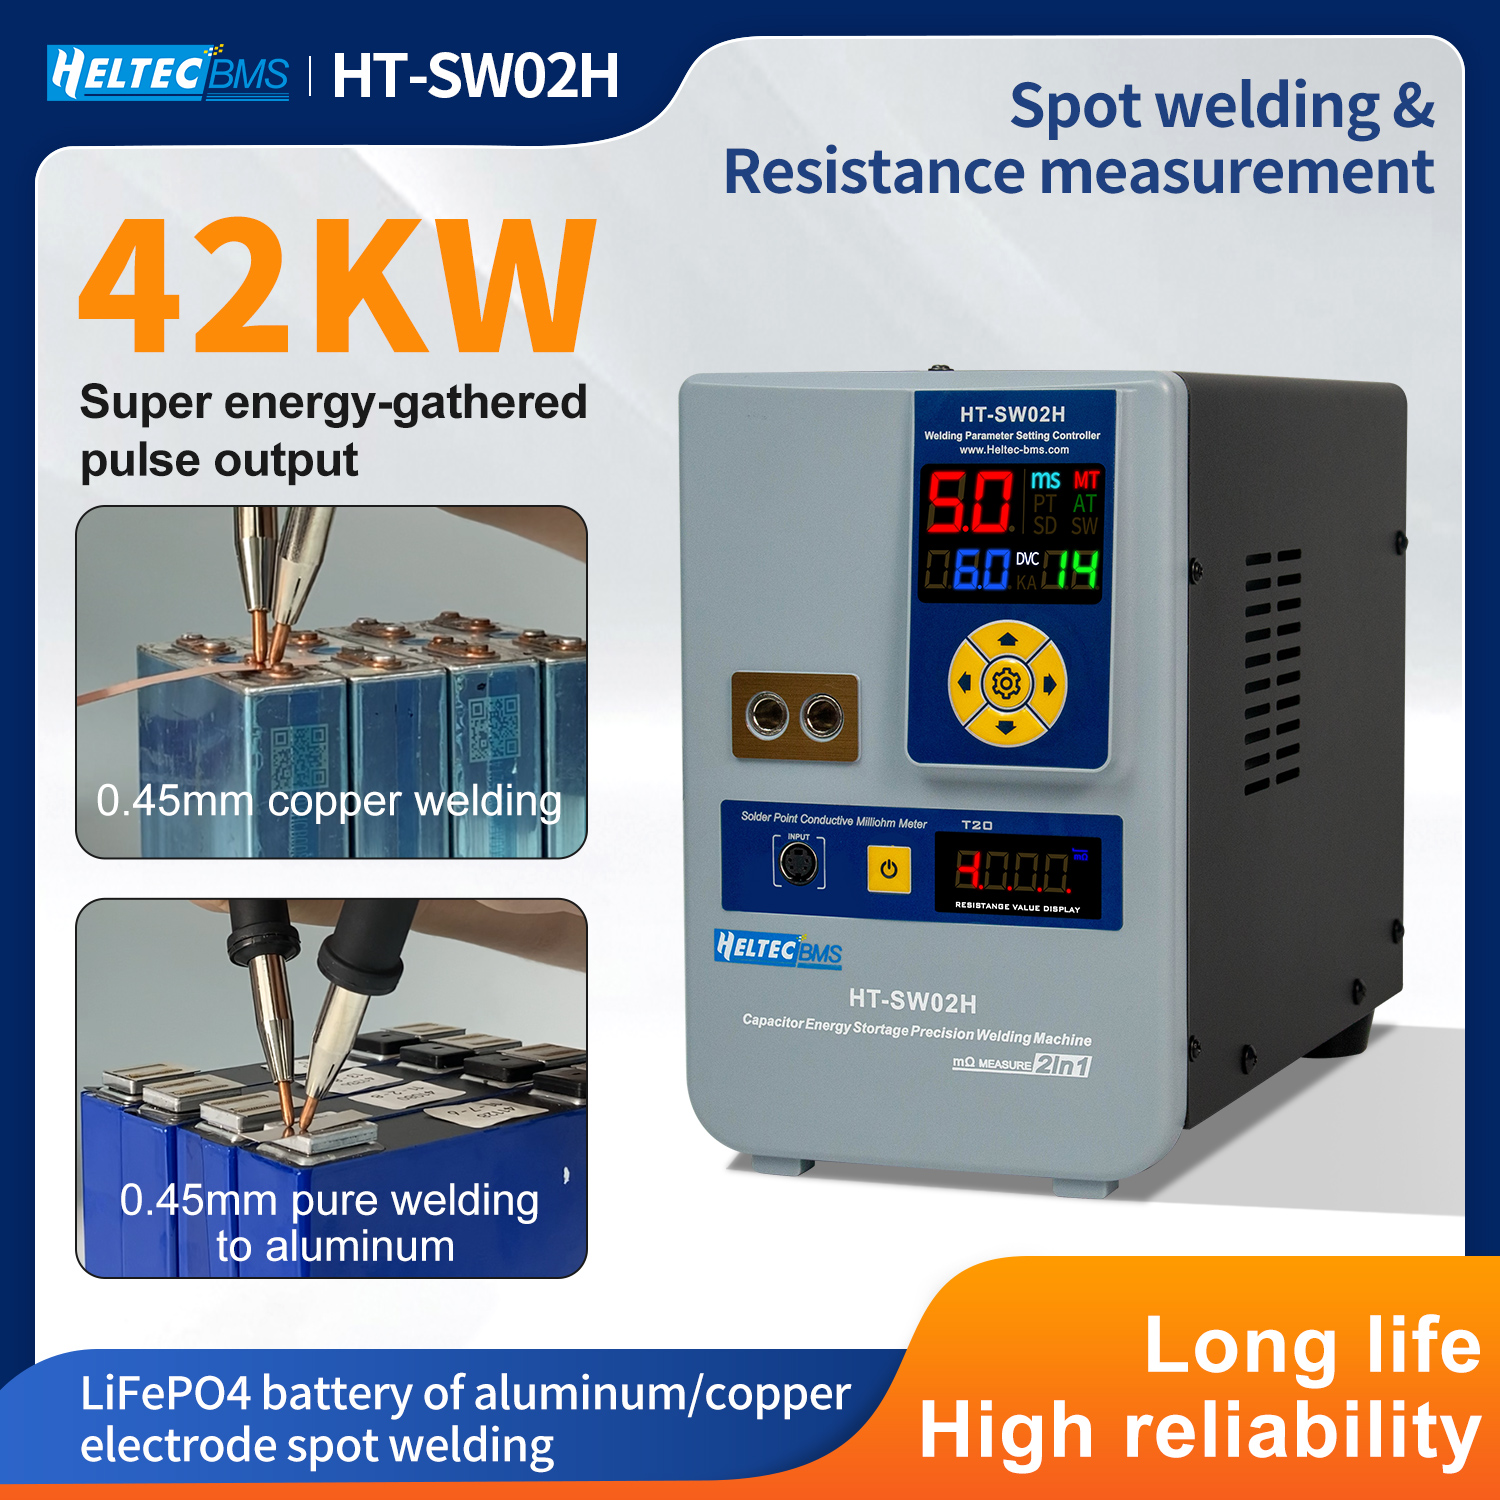 heltec-spot-weld-machine-02h-capacitor-energy-storage-welder-42KW.jpg